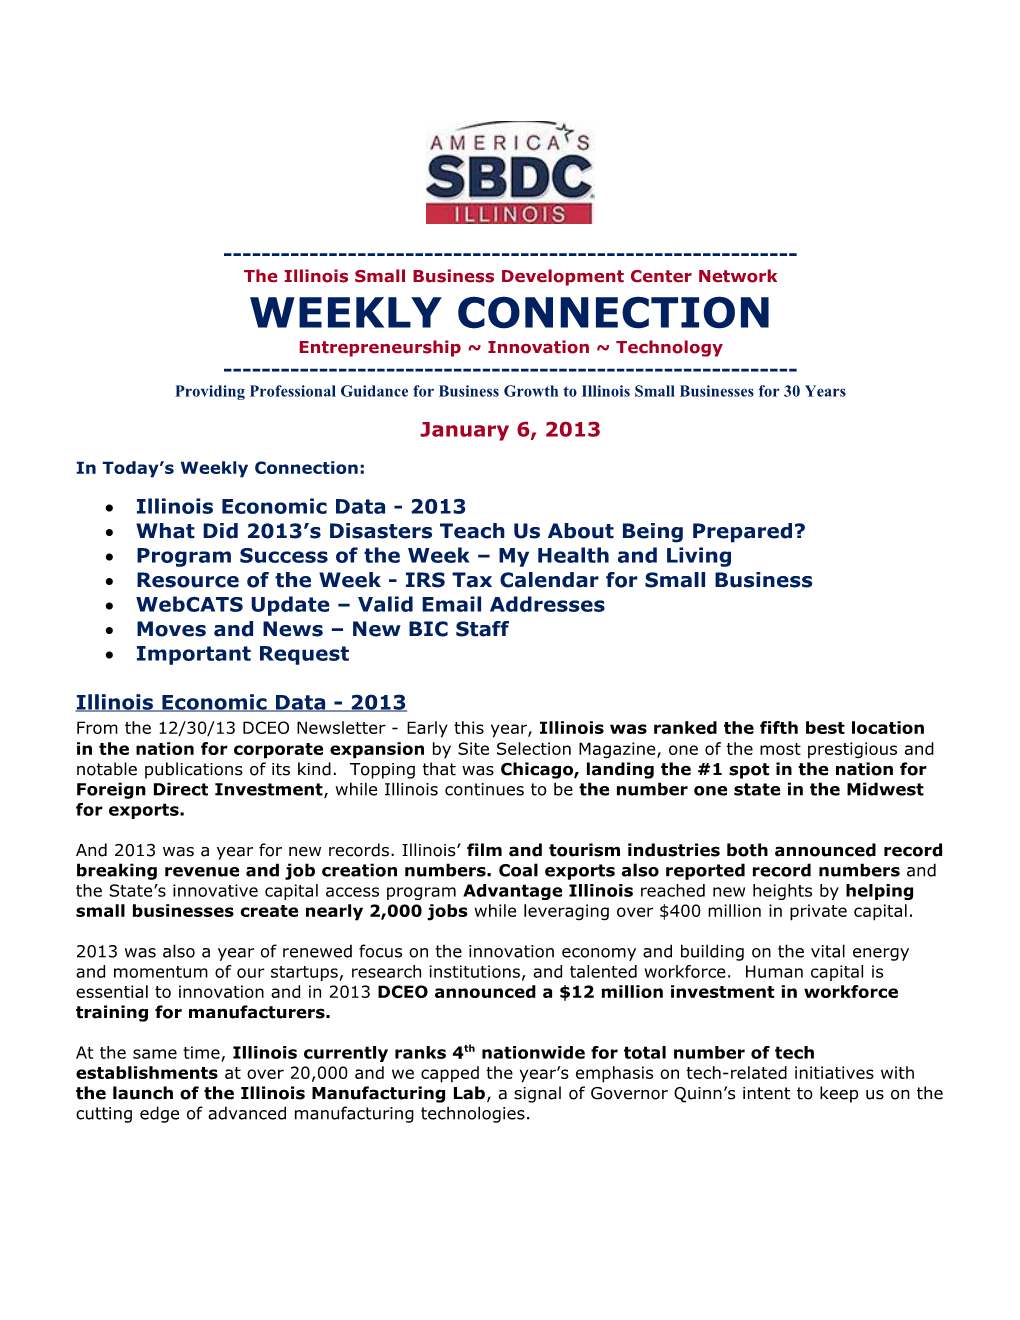 The Illinois Small Business Development Center Network s9